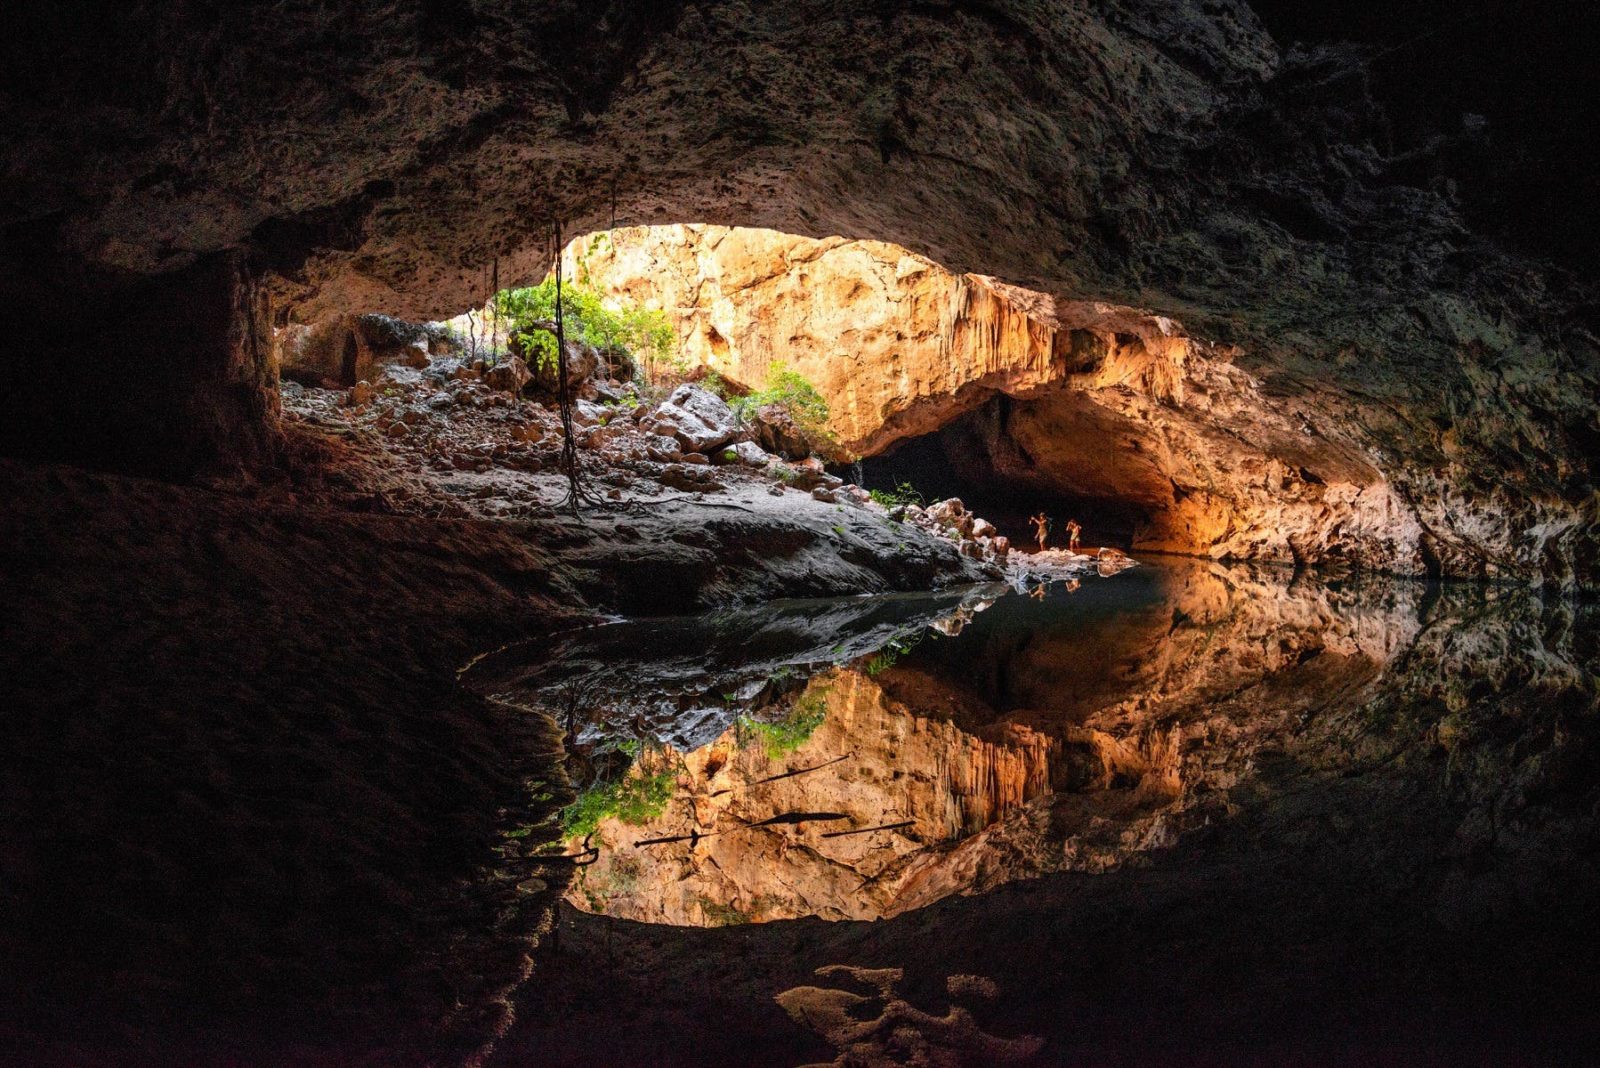 Dimalurru Tunnel Creek National Park, Fitzroy Crossing, Western Australia